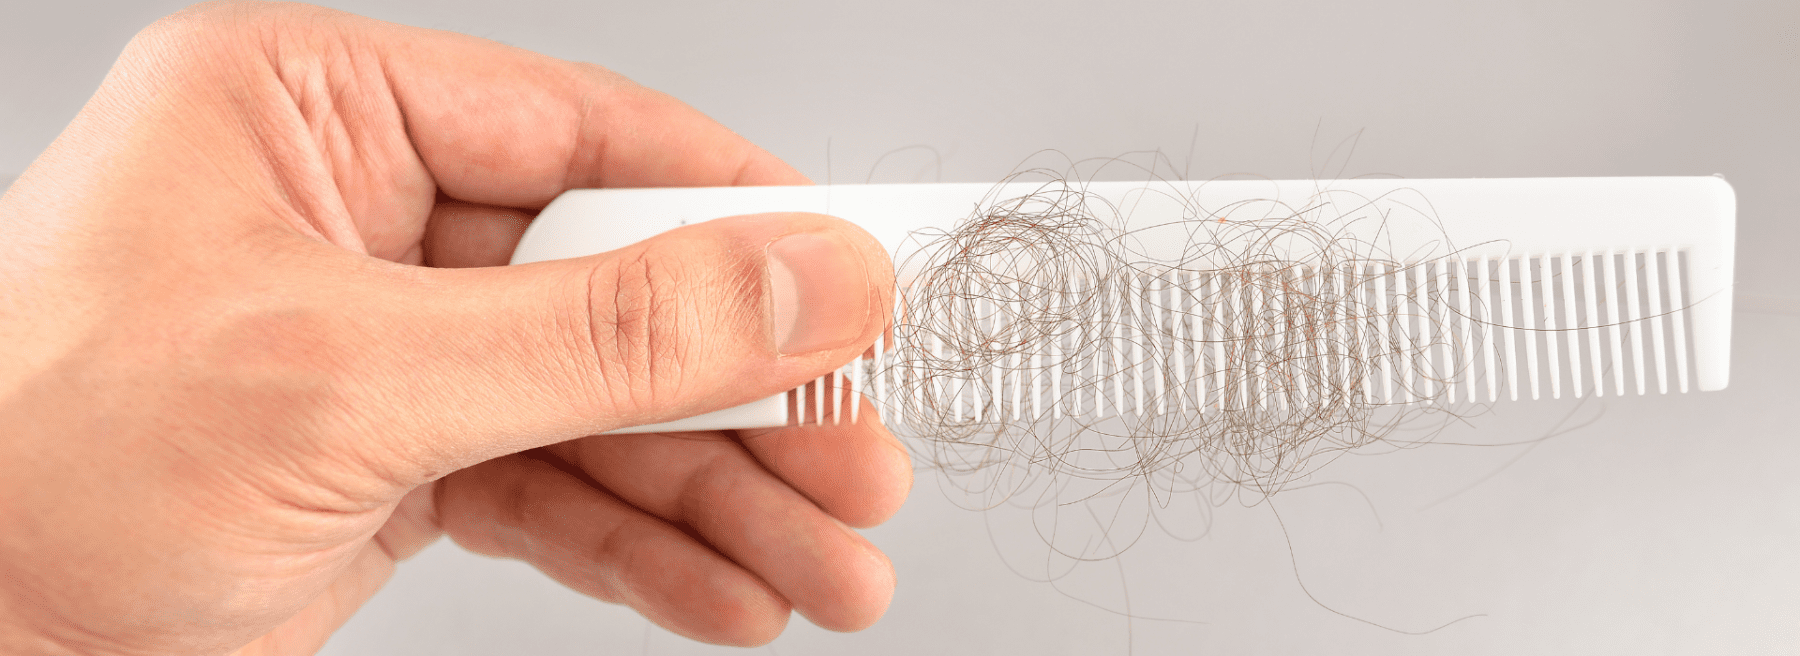 long hair loss on comb